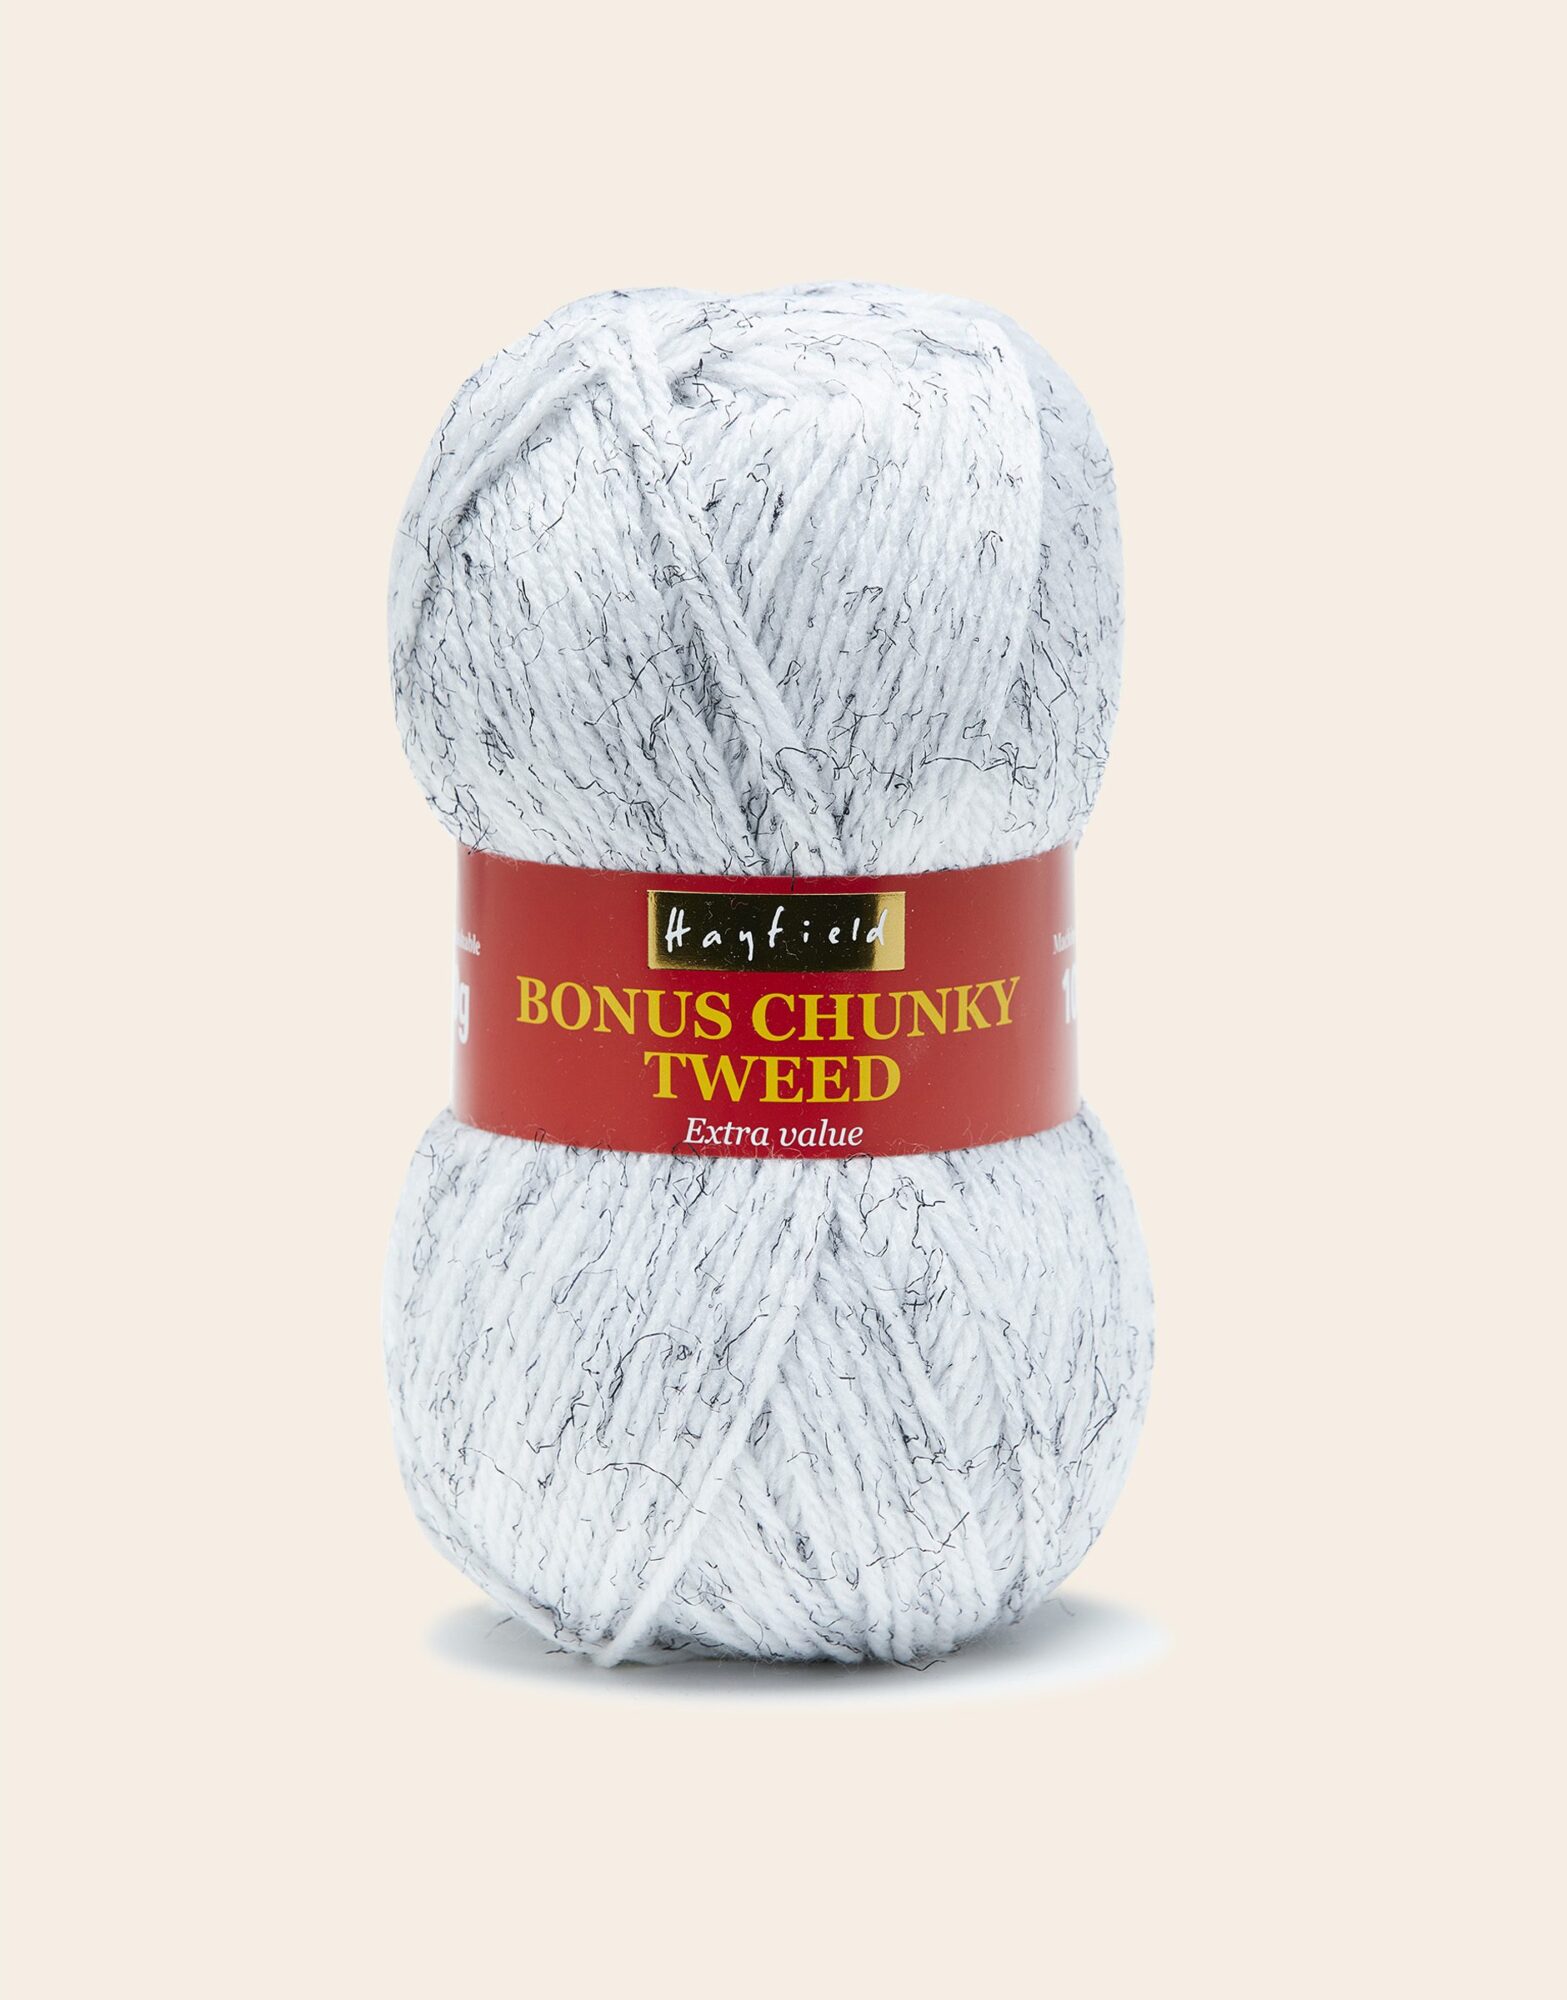 hayfield-bonus-chunky-tweed